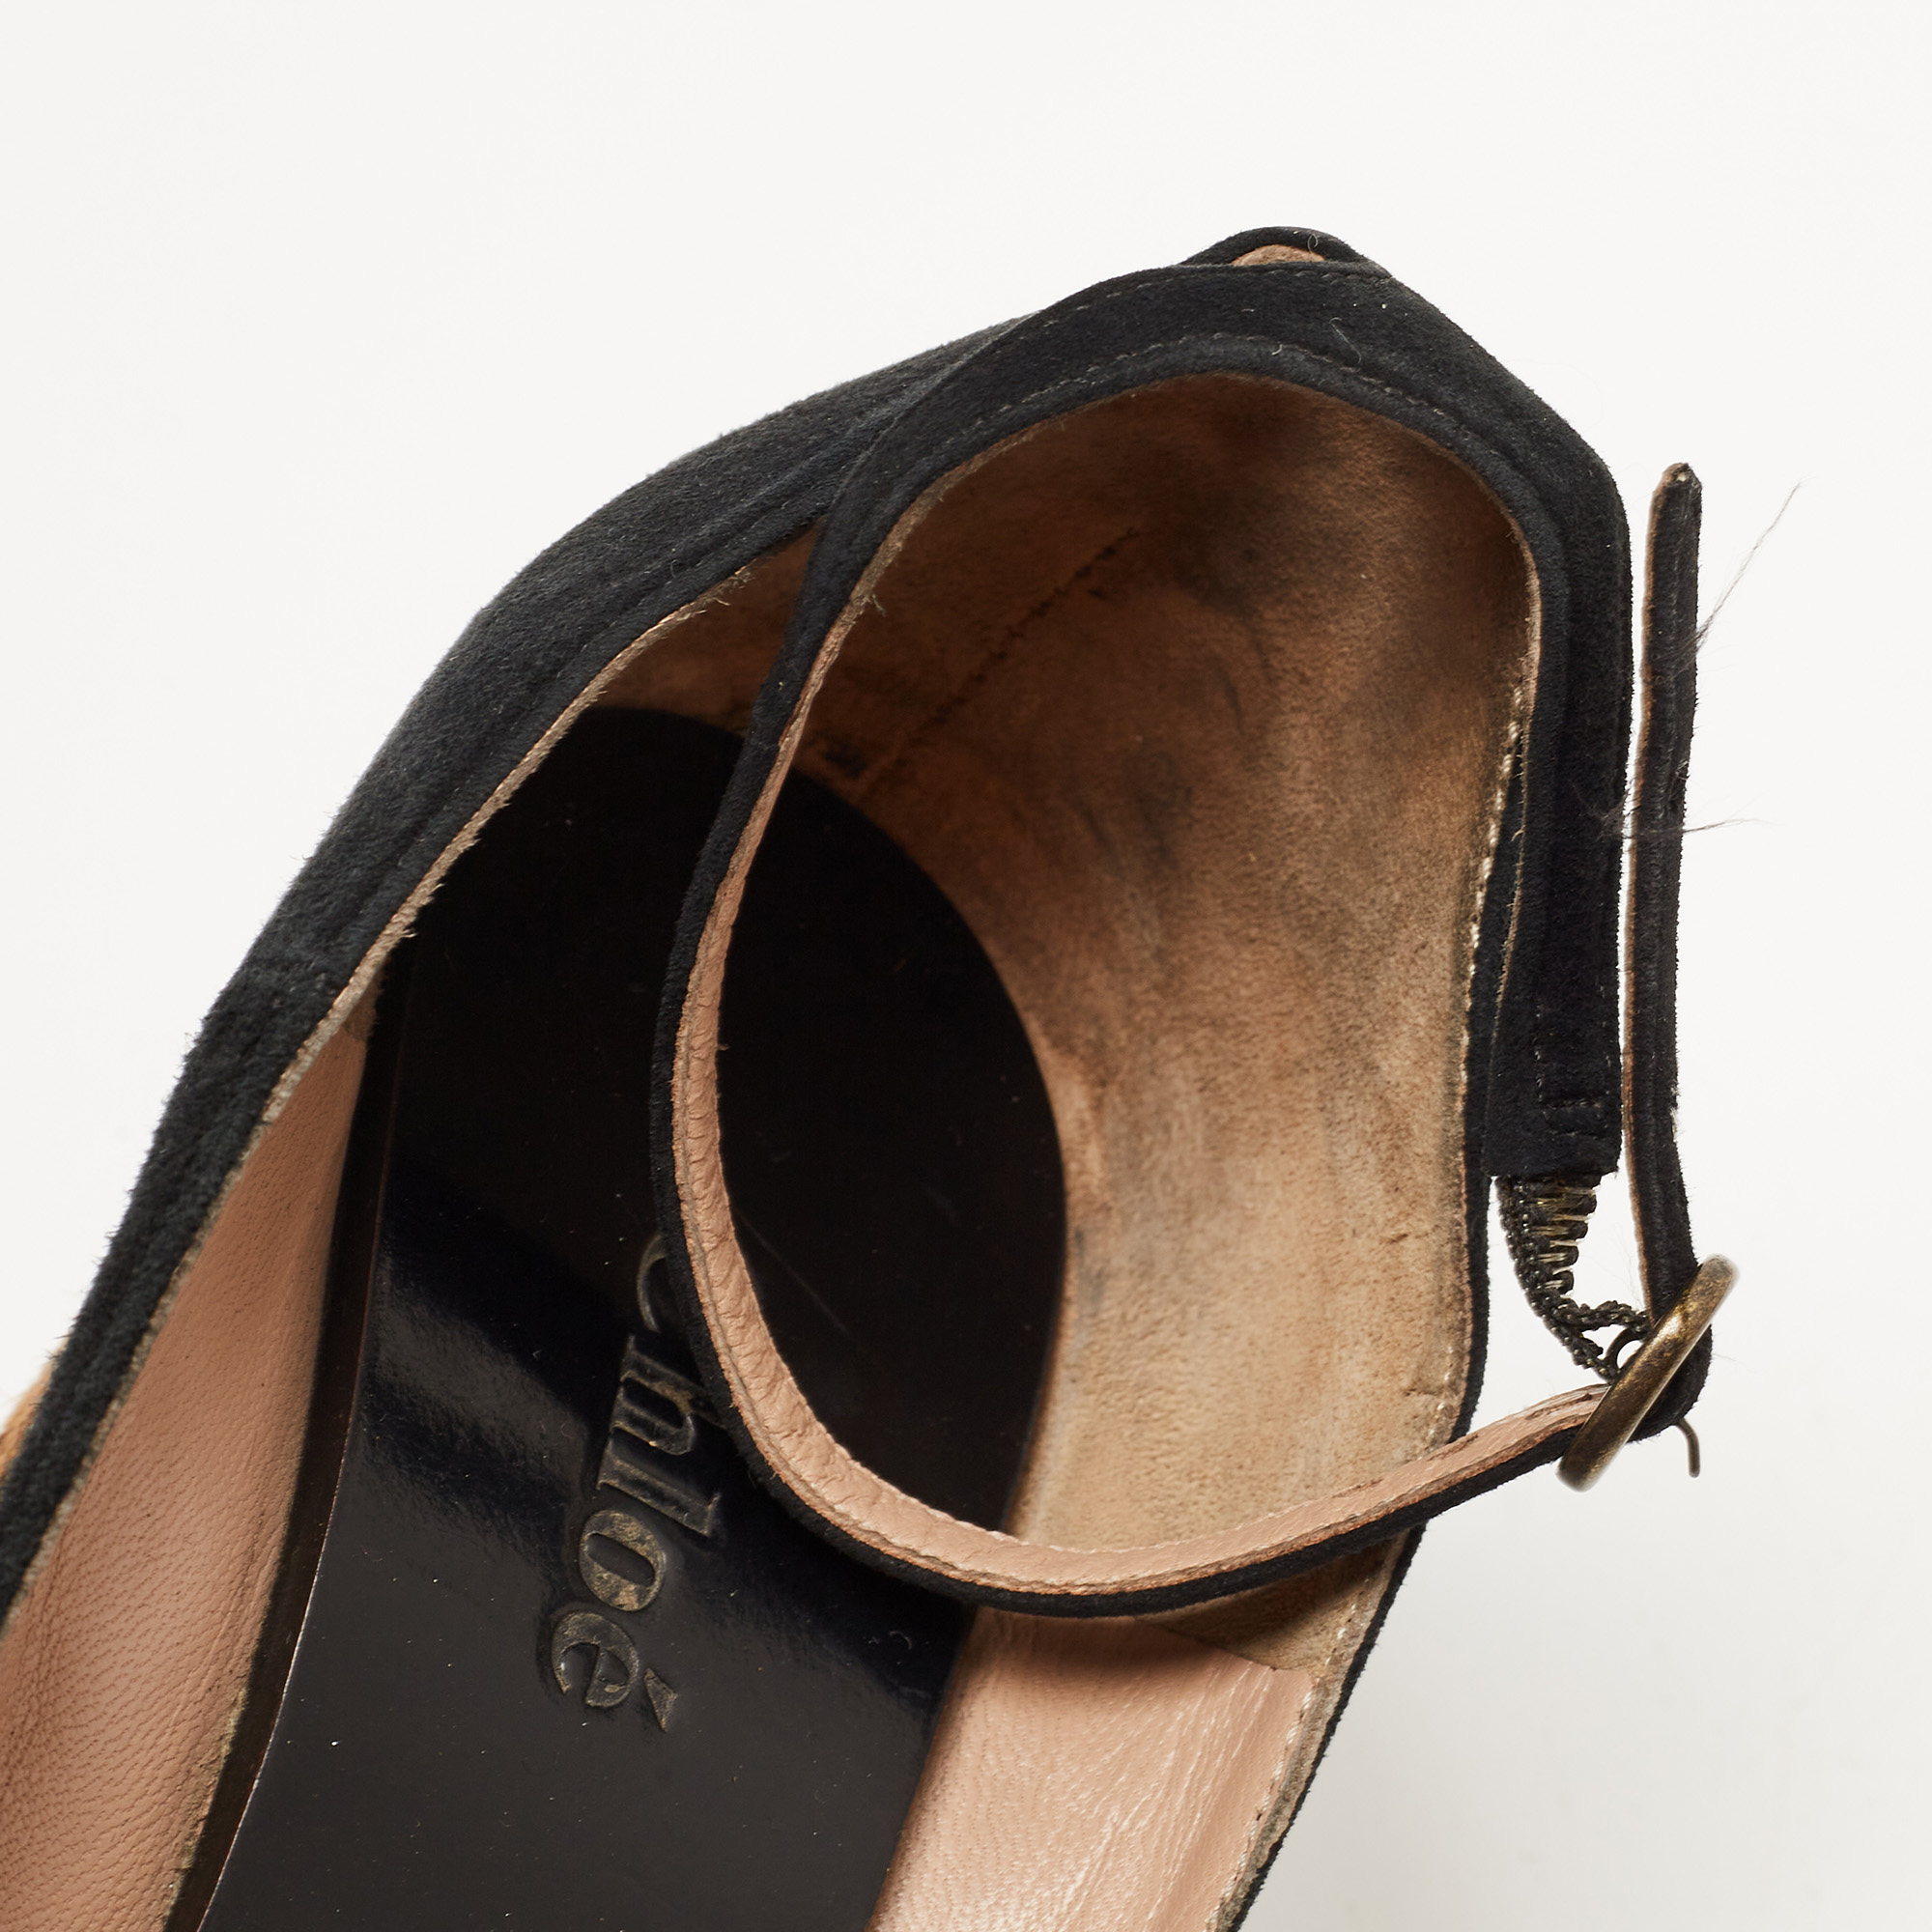 Chloe Black Suede Peep Toe Ankle Strap Printed Wedge Sandals Size 38